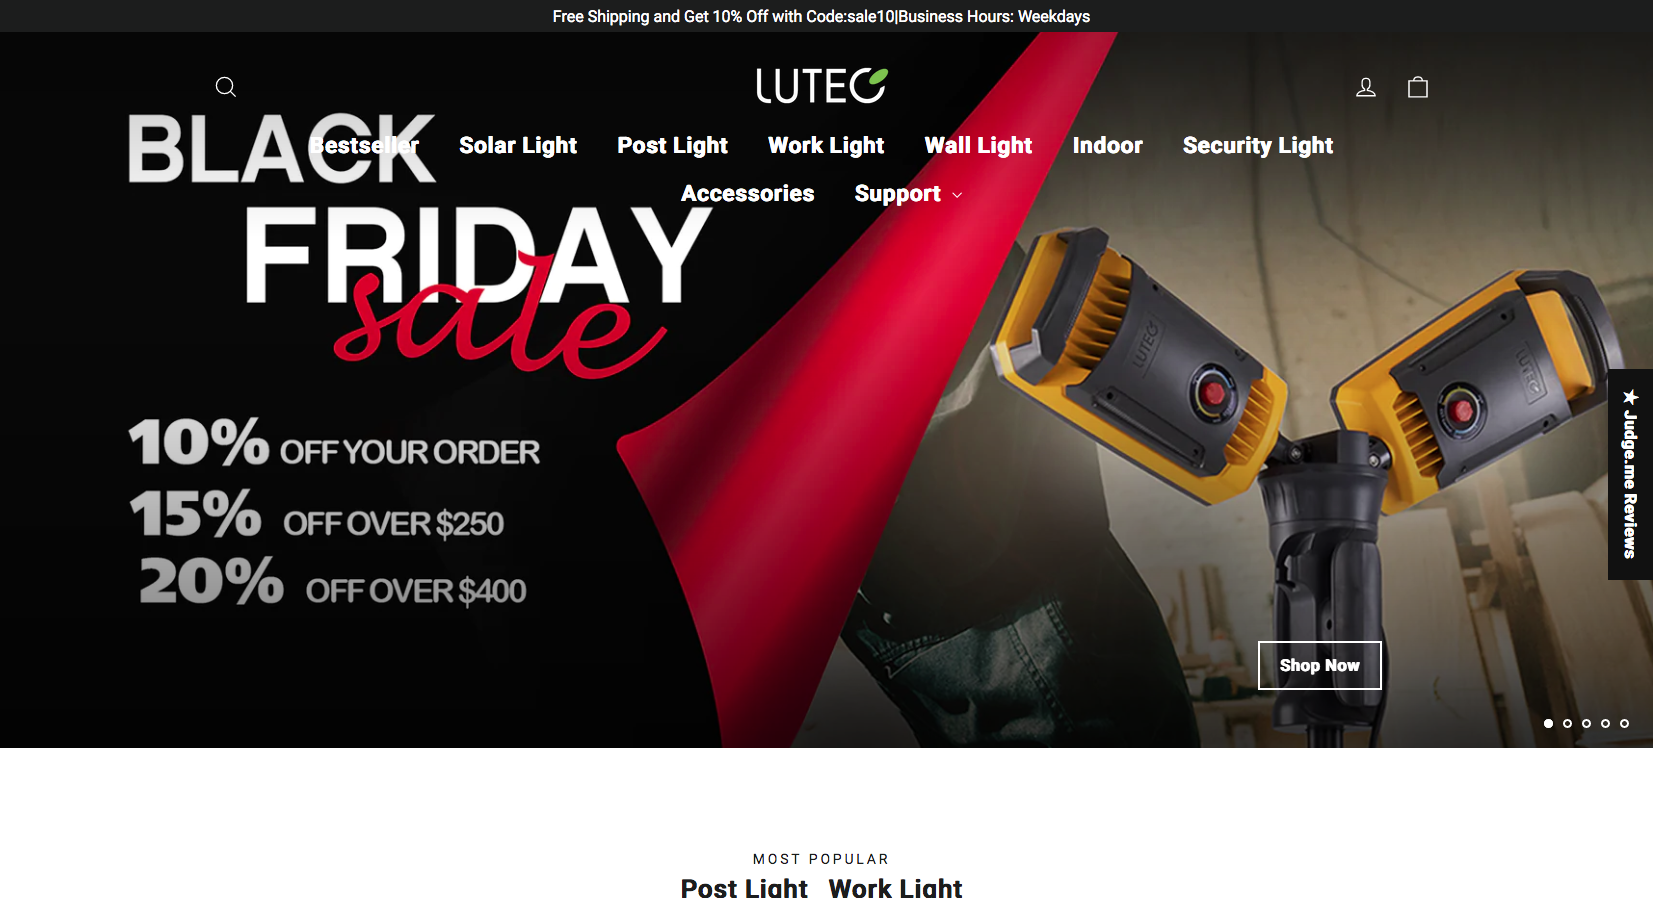 Lutec-lighting.com